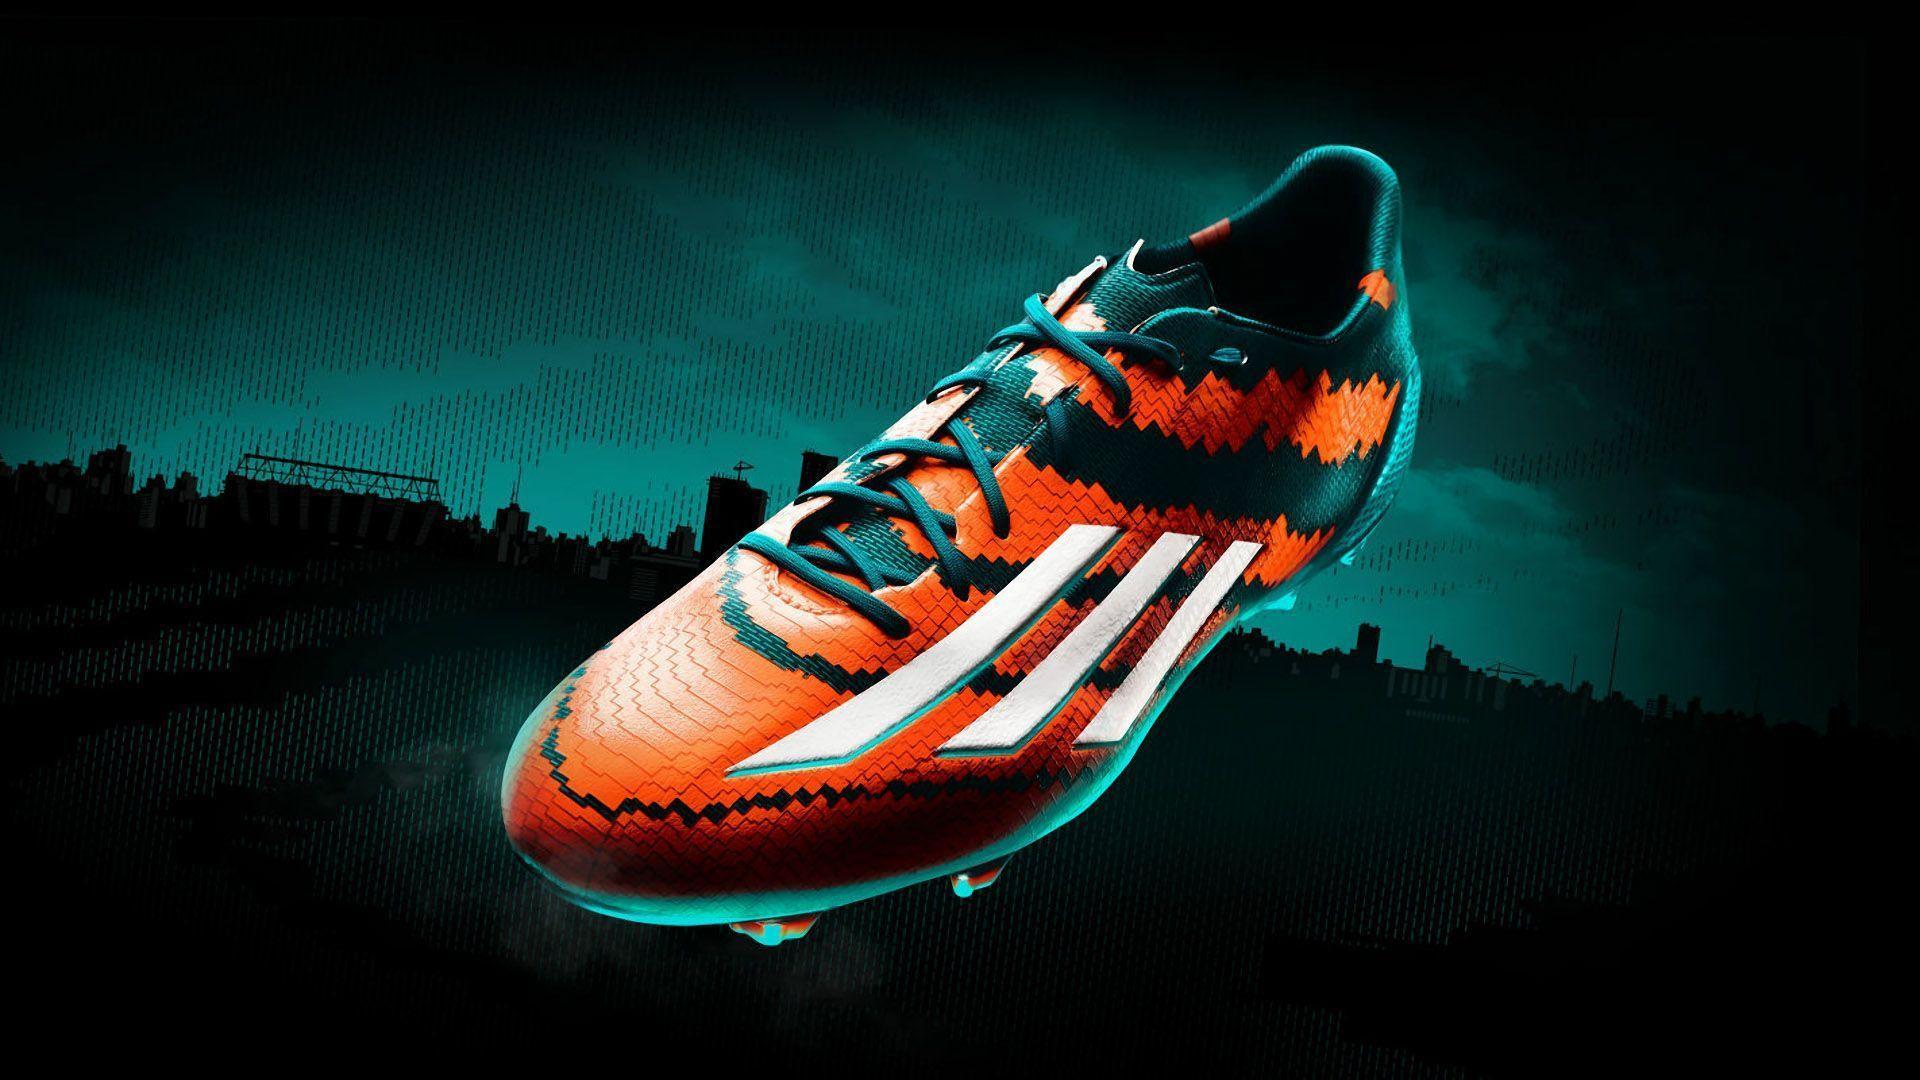 Adidas Messi Mirosar10 2015 Football Boots Wallpaper Wide or HD